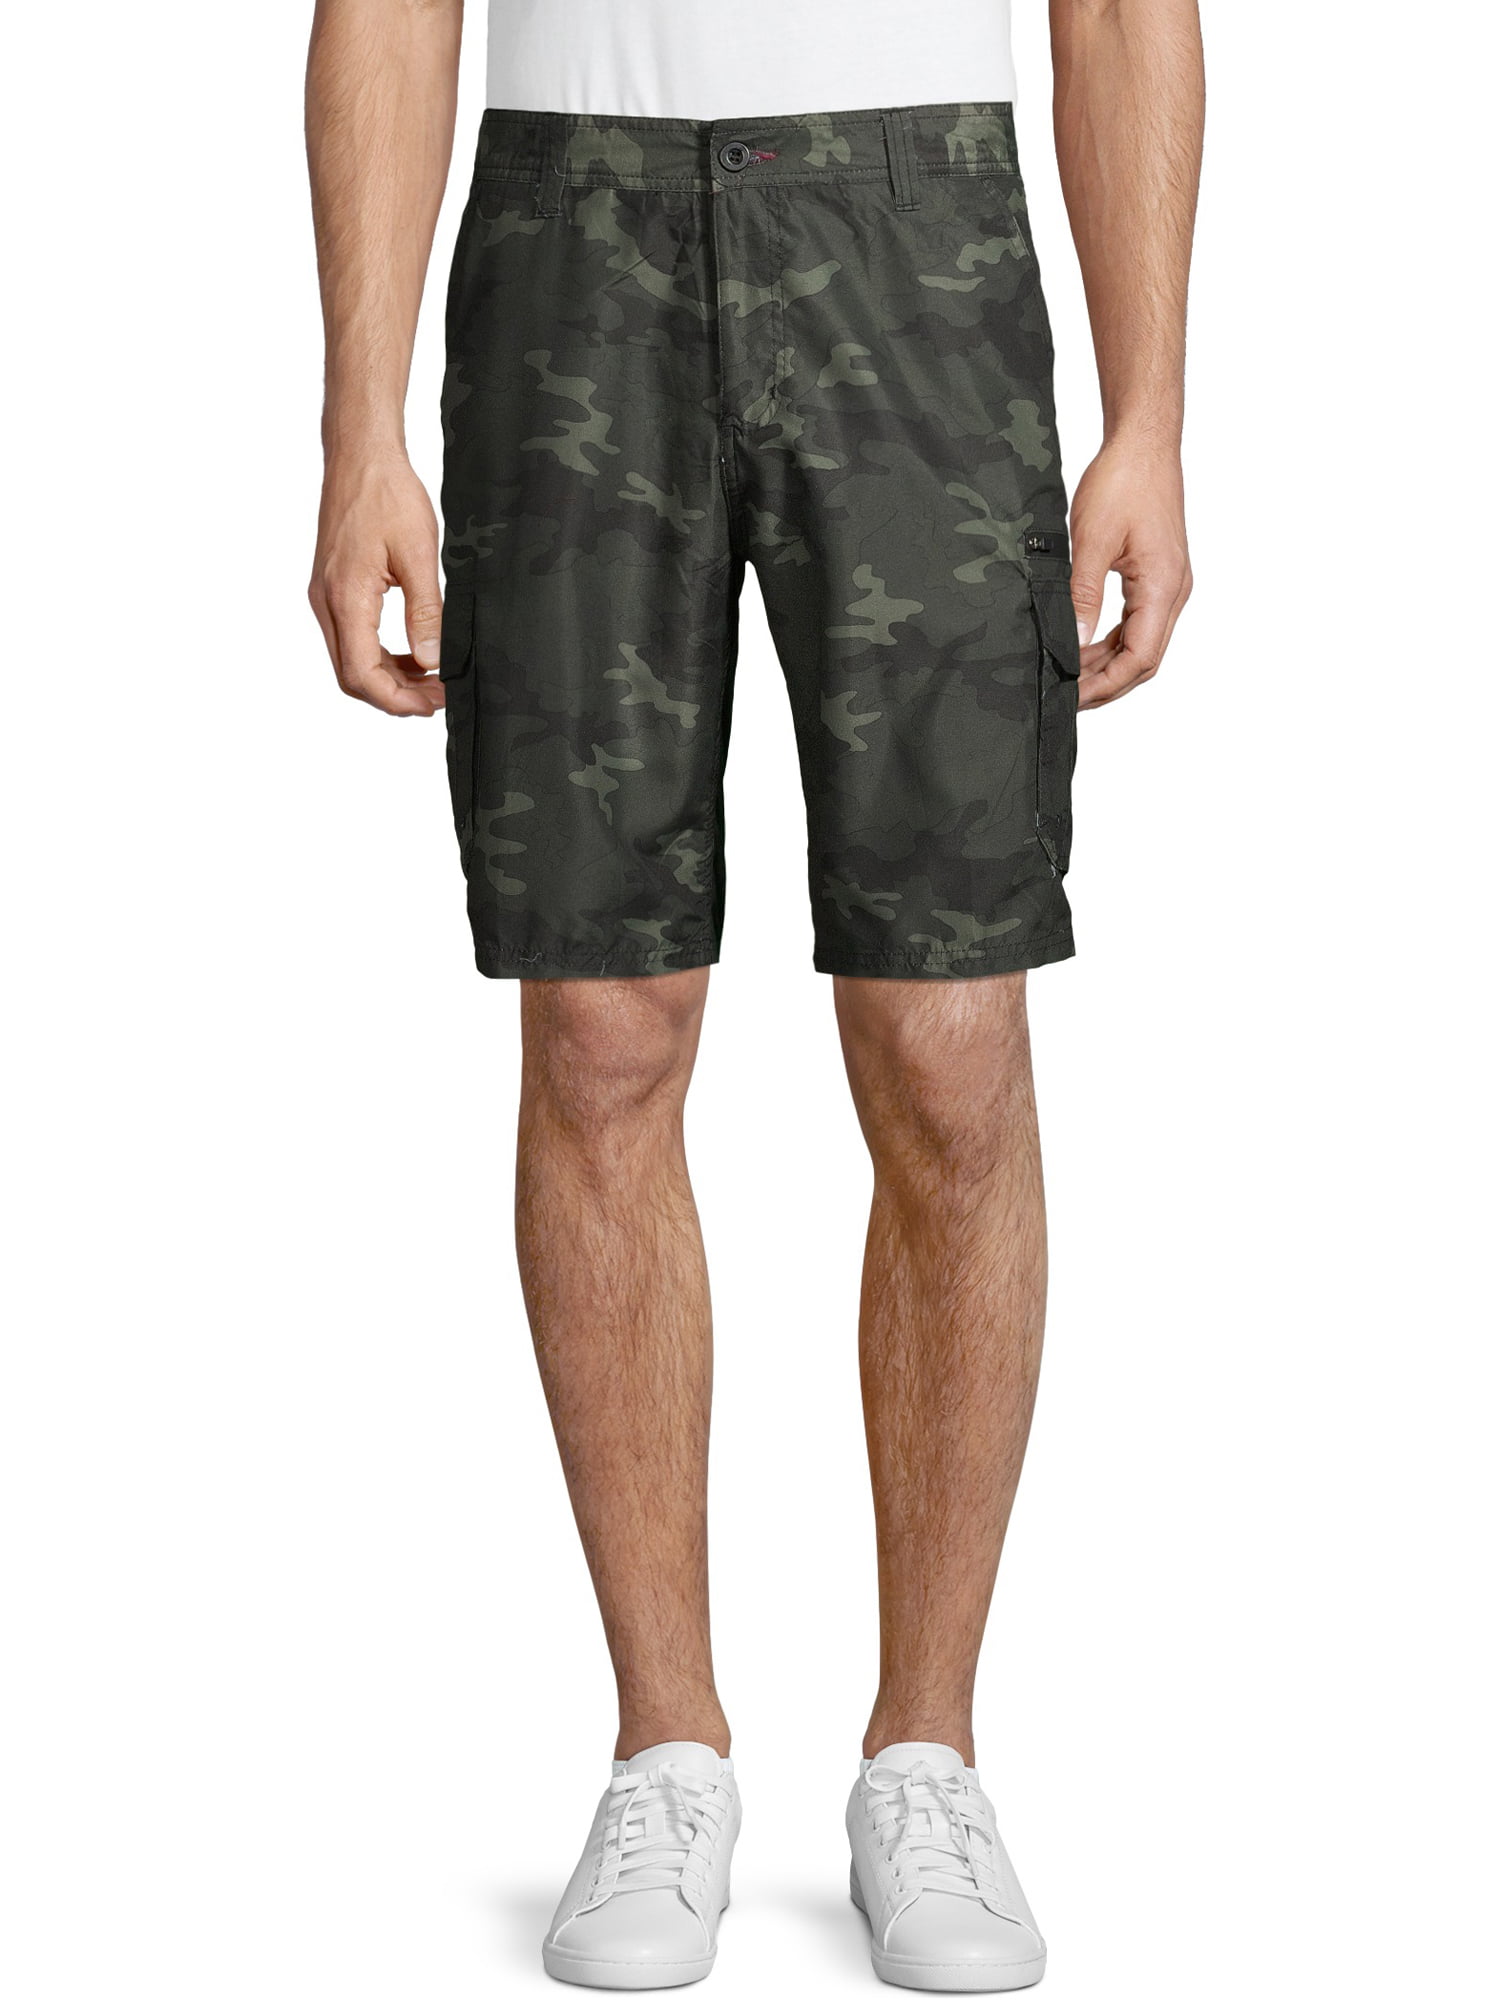 BURNSIDE - Burnside Men's Microfiber Cargo Shorts - Walmart.com ...